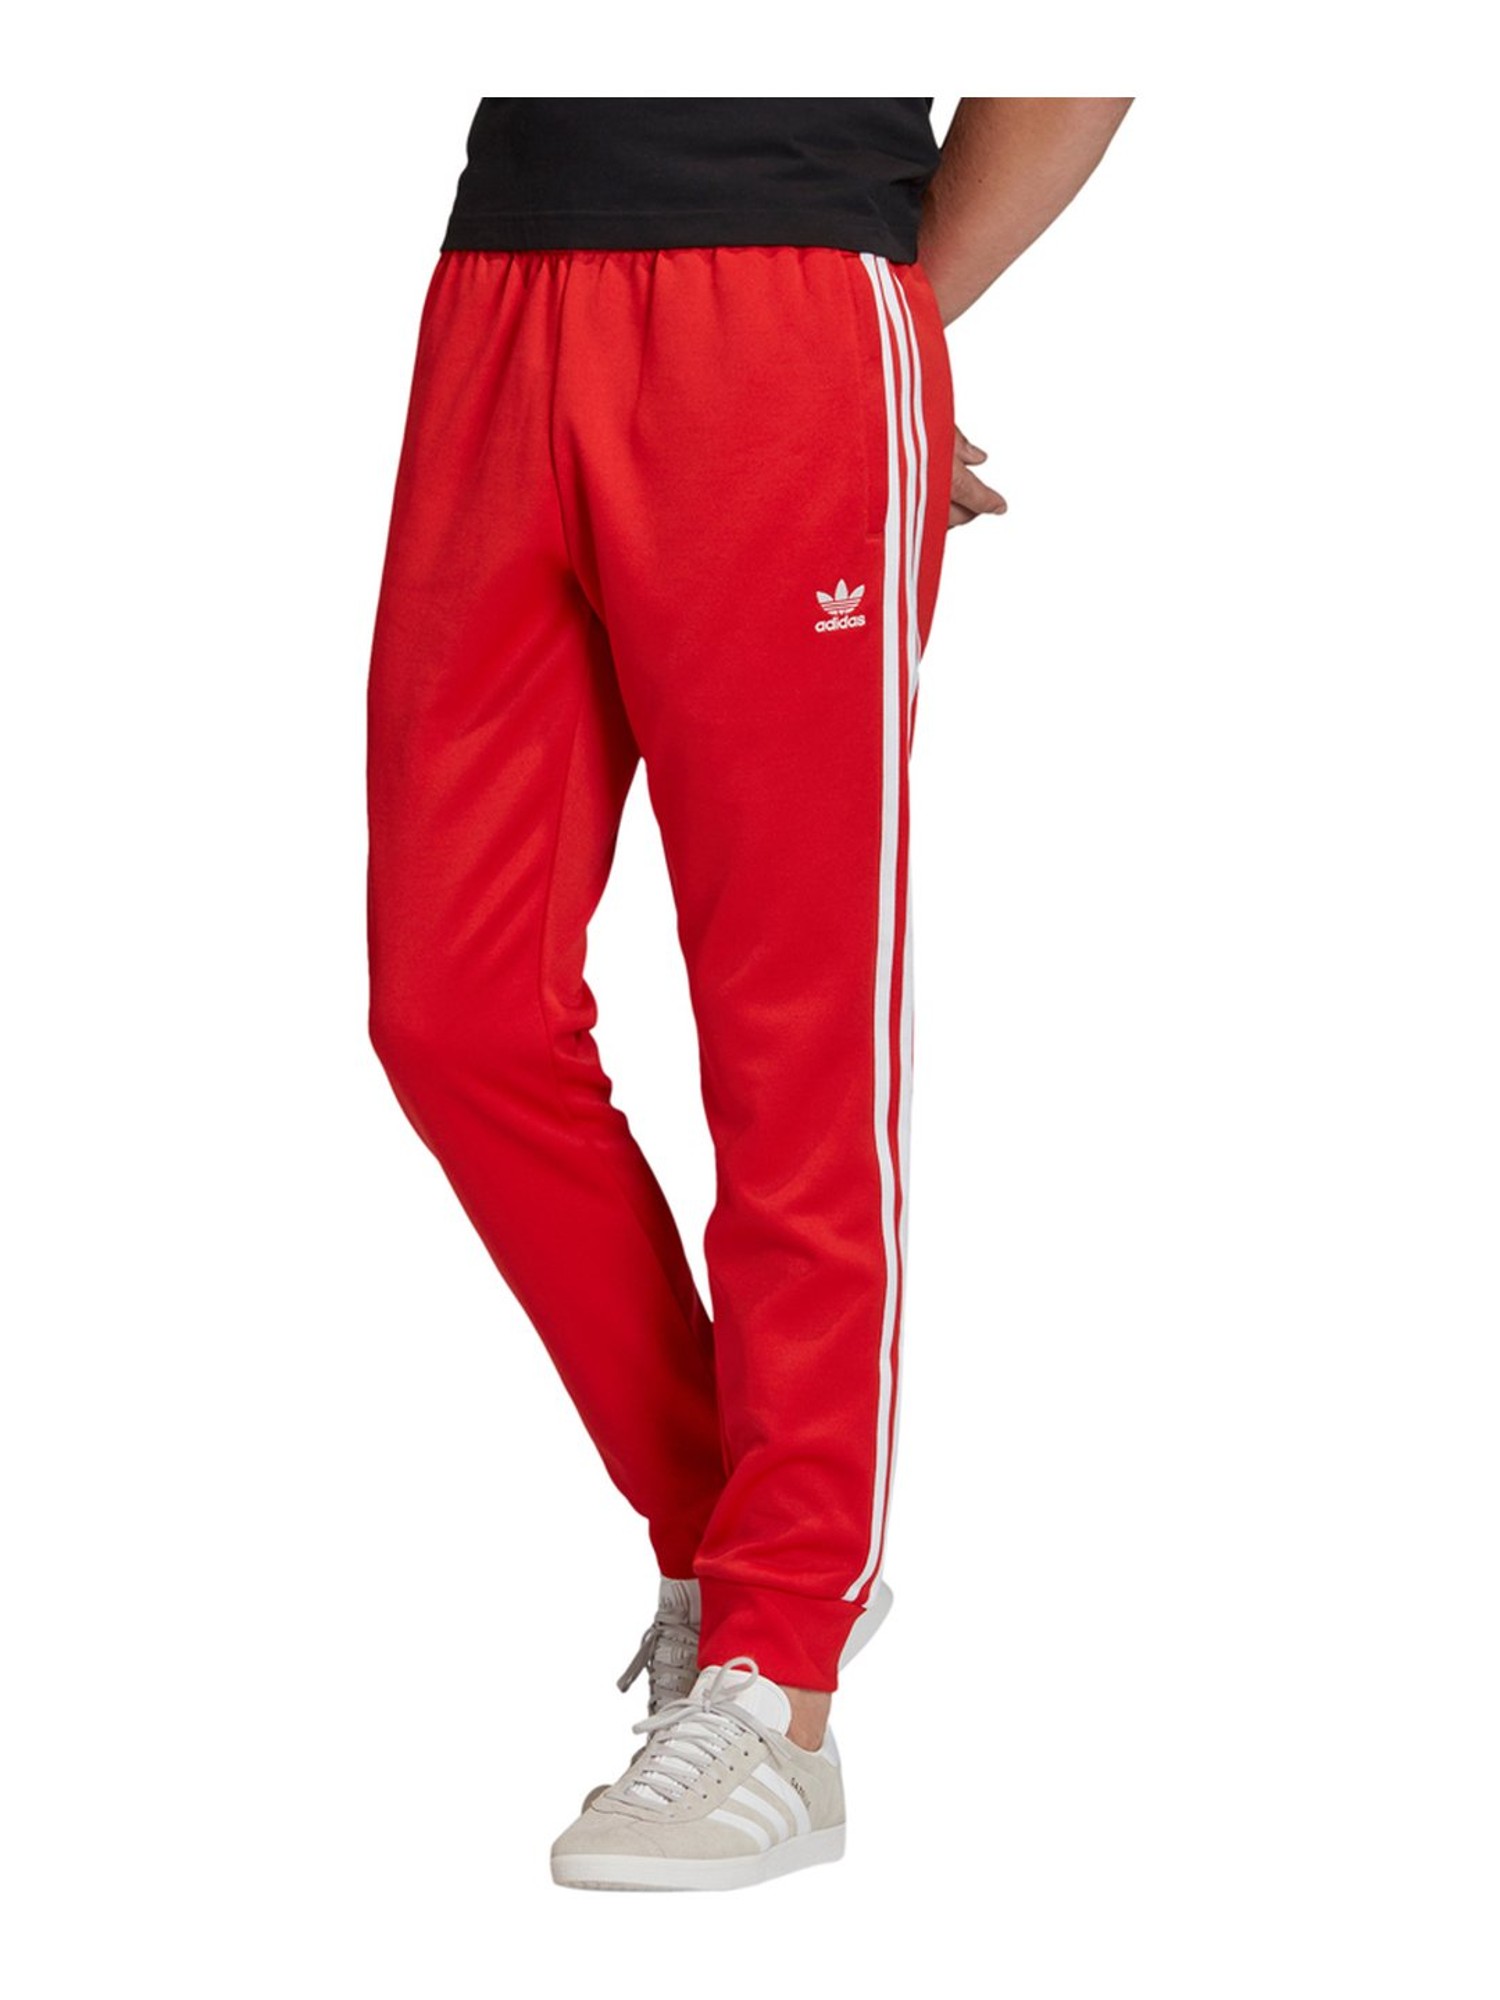 Red adidas Originals SST Track Pants | JD Sports Malaysia